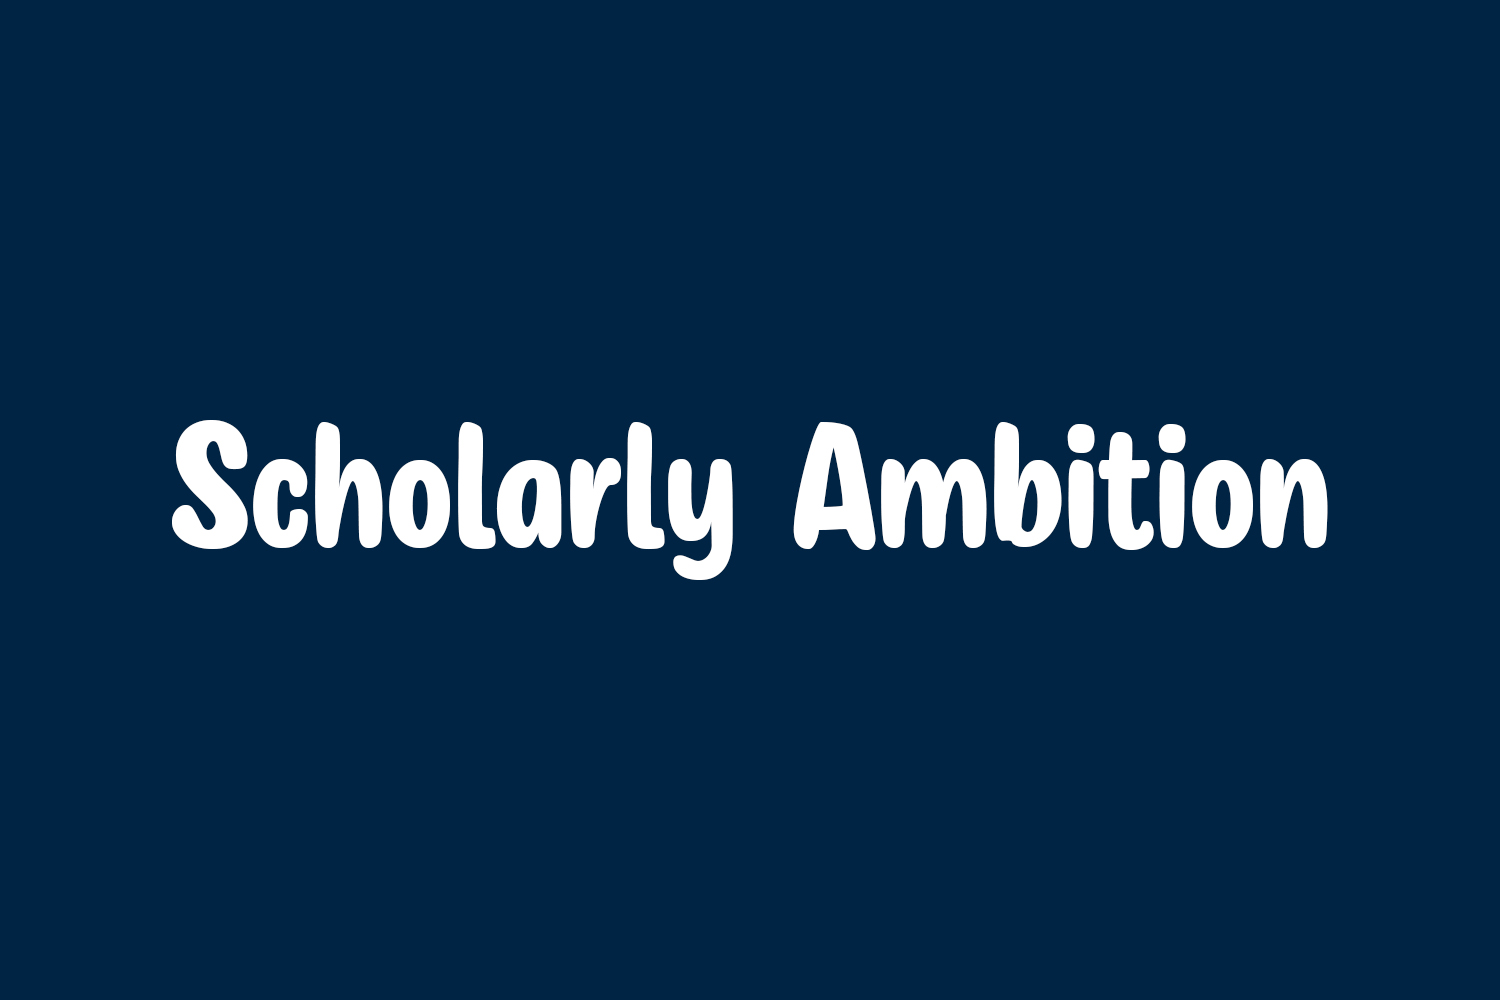 Scholarly Ambition Free Font